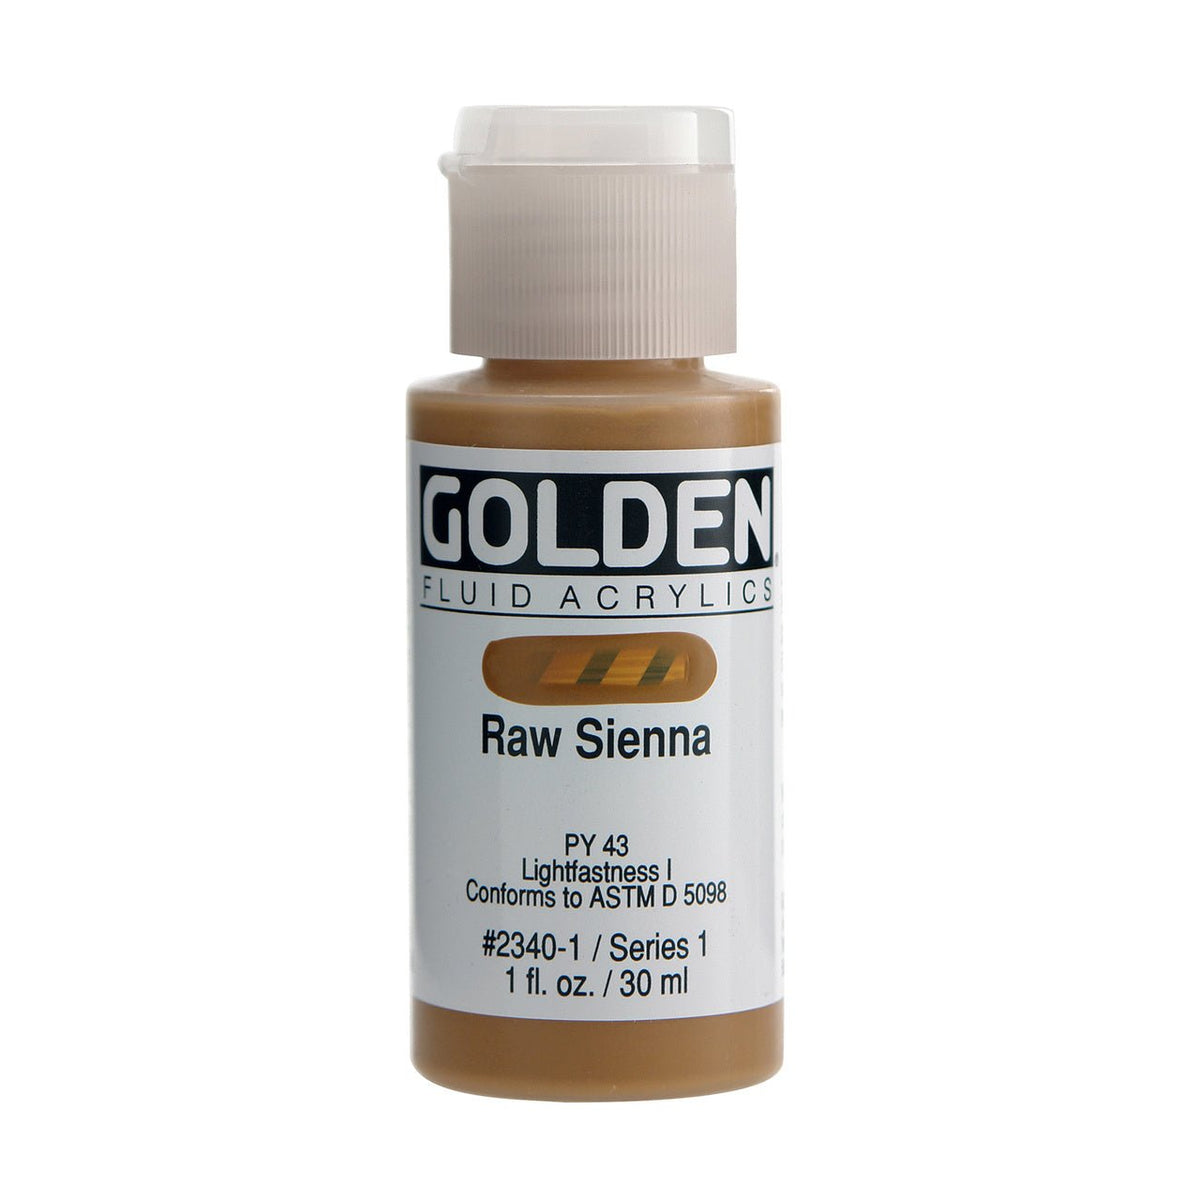 Golden Fluid Acrylic Raw Sienna 1 oz - merriartist.com